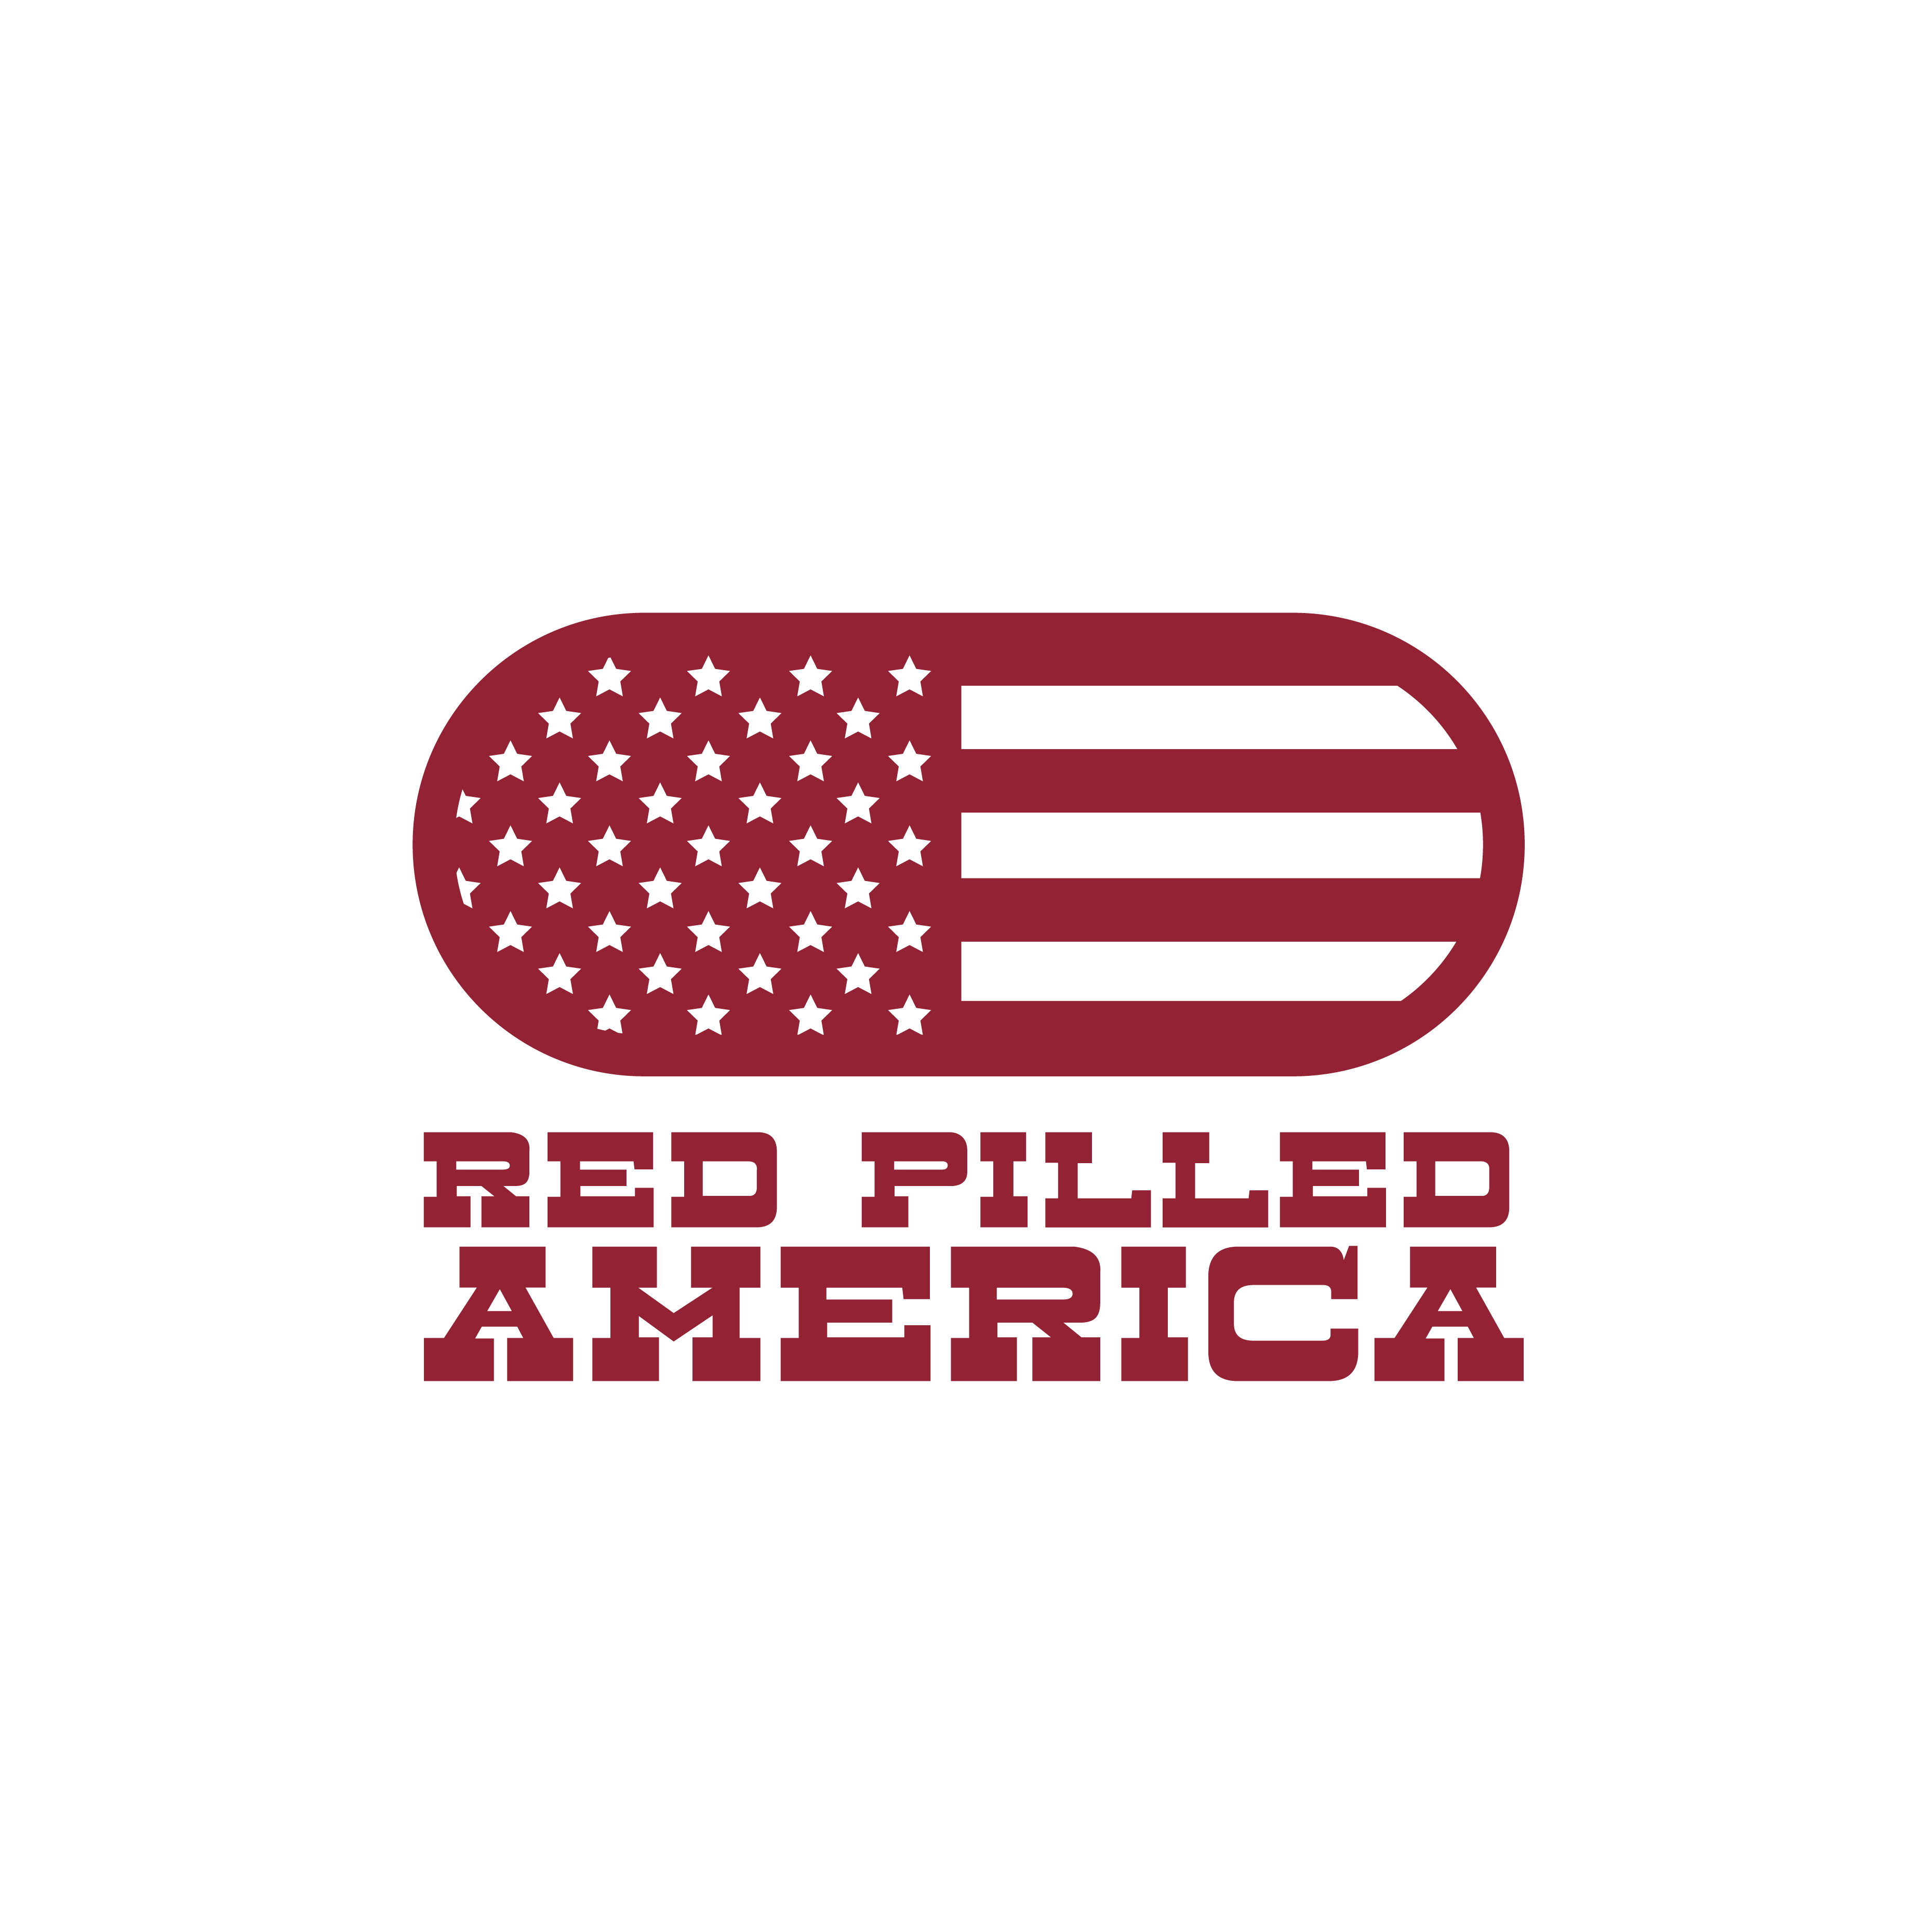 Red Pilled America logo